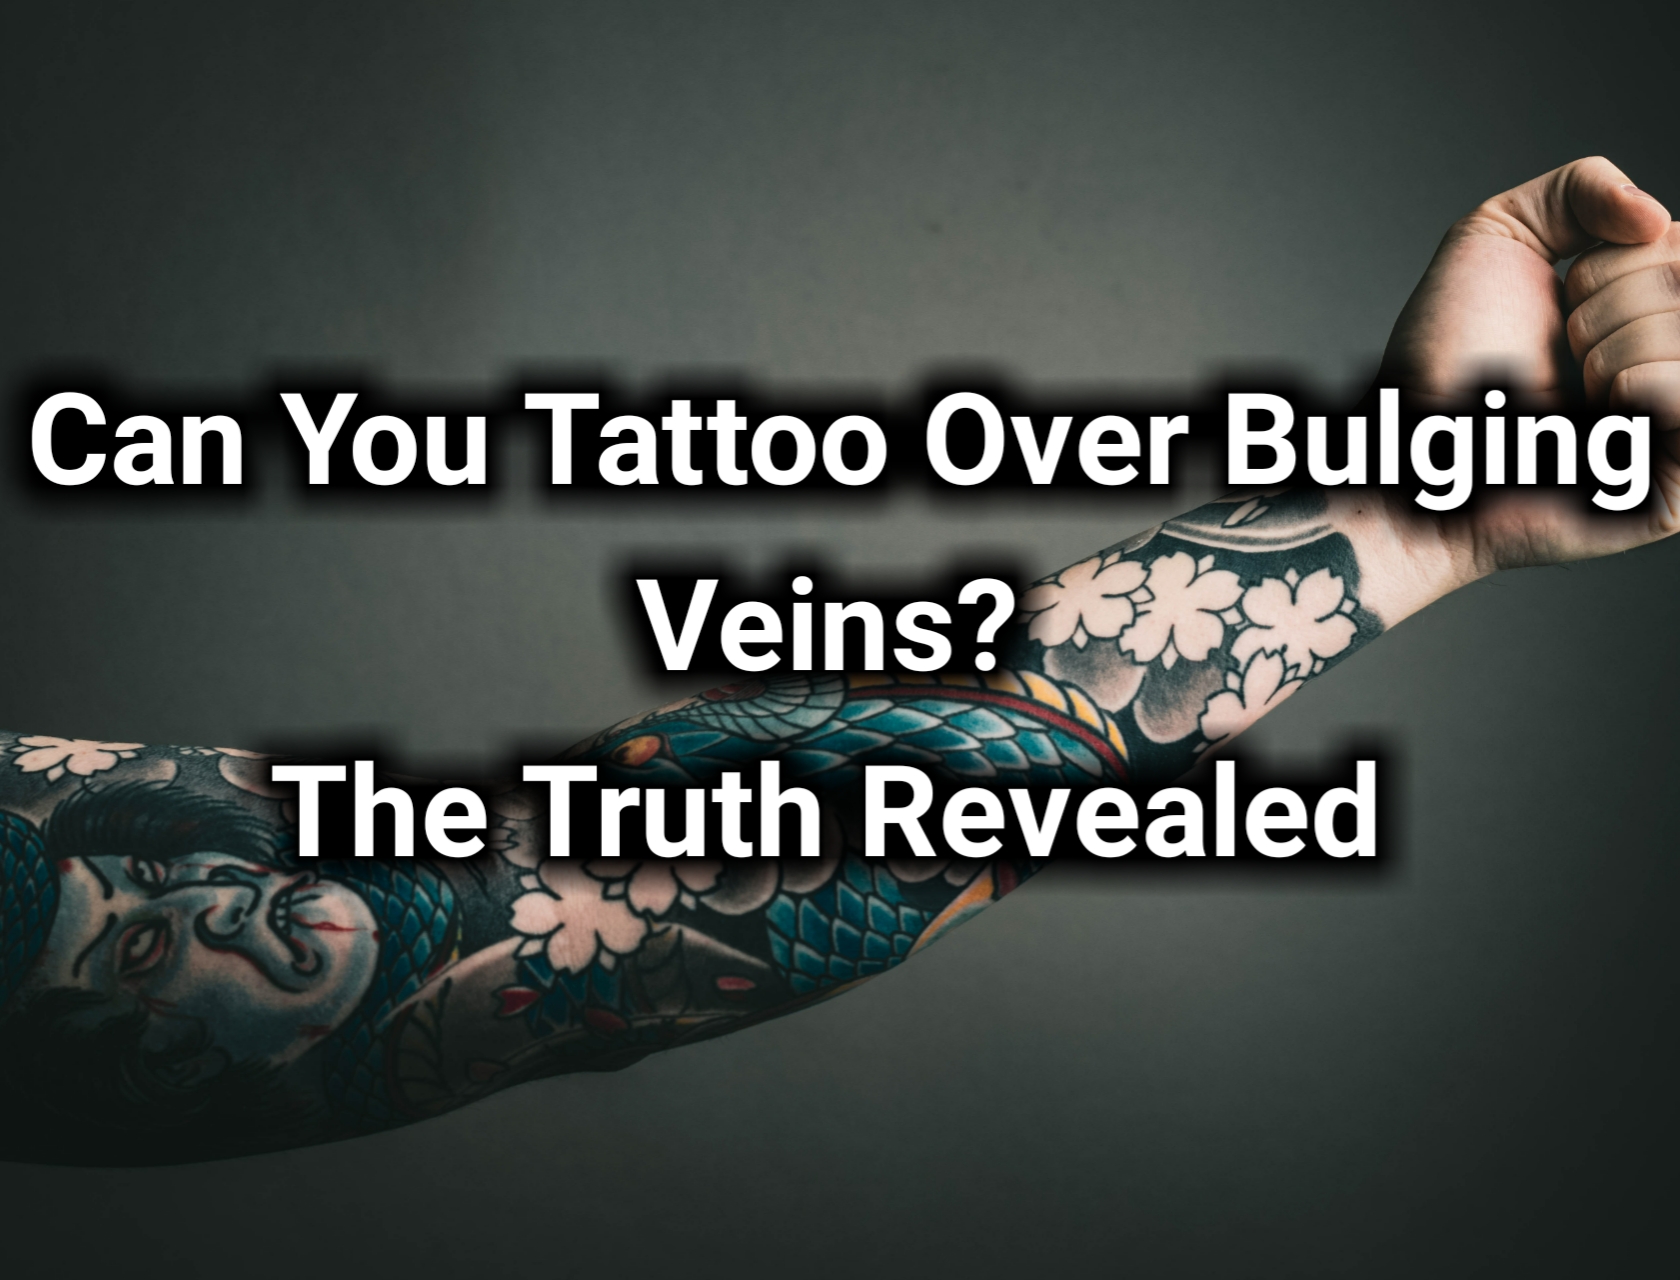 Can You Tattoo Over Bulging Veins